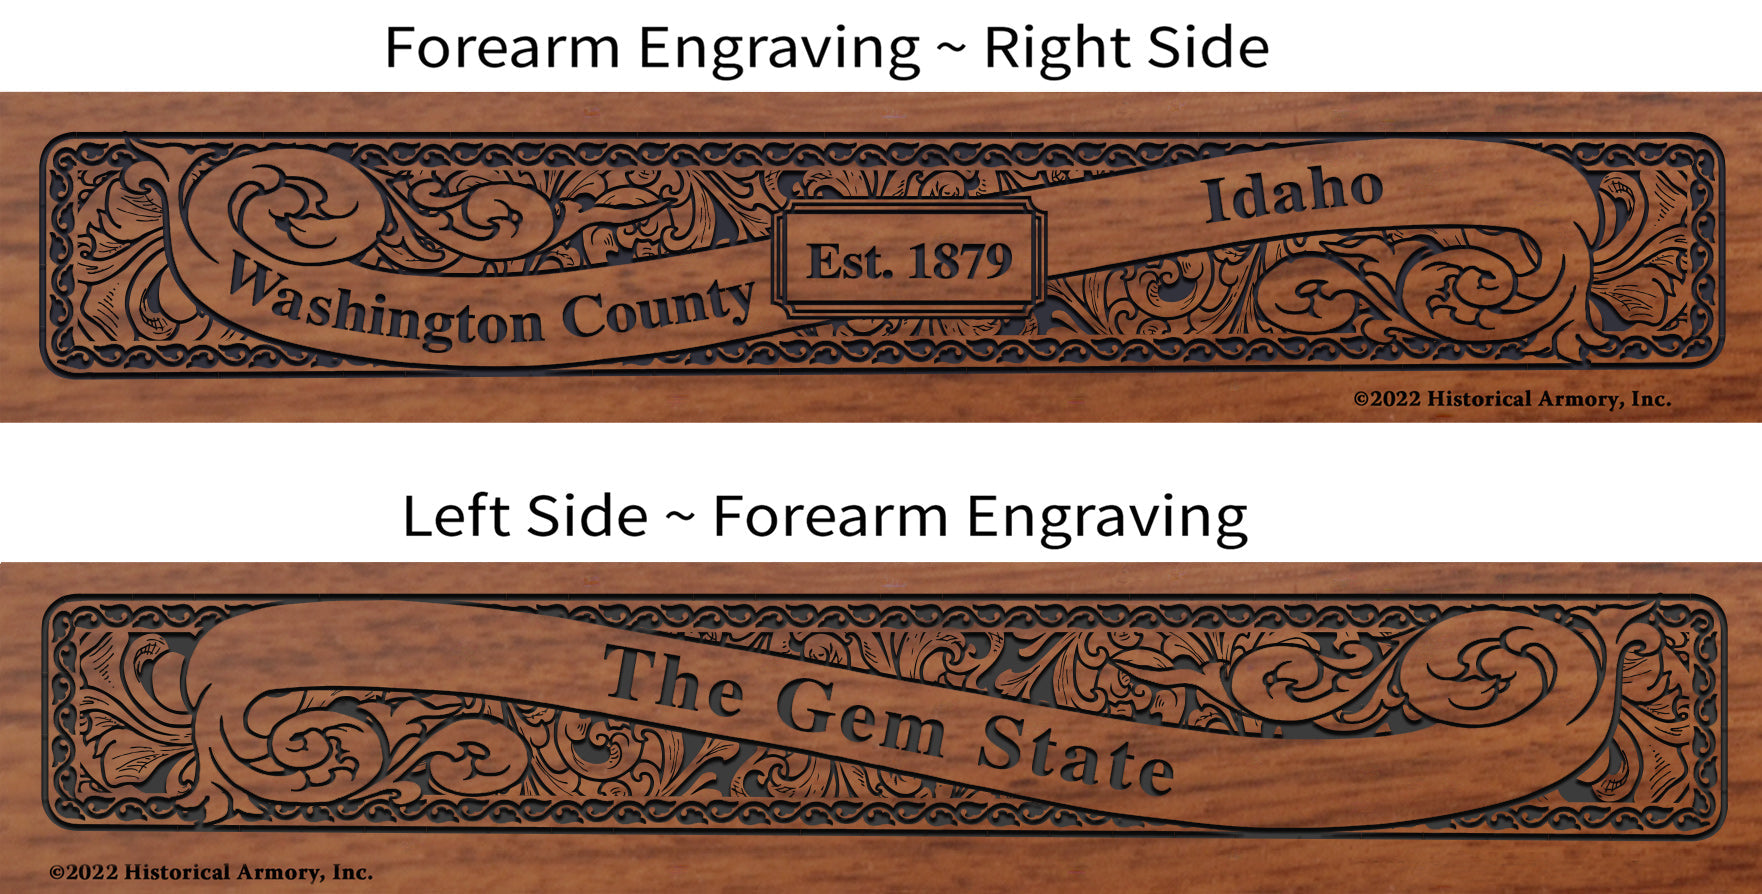 Washington County Idaho Engraved Rifle Forearm